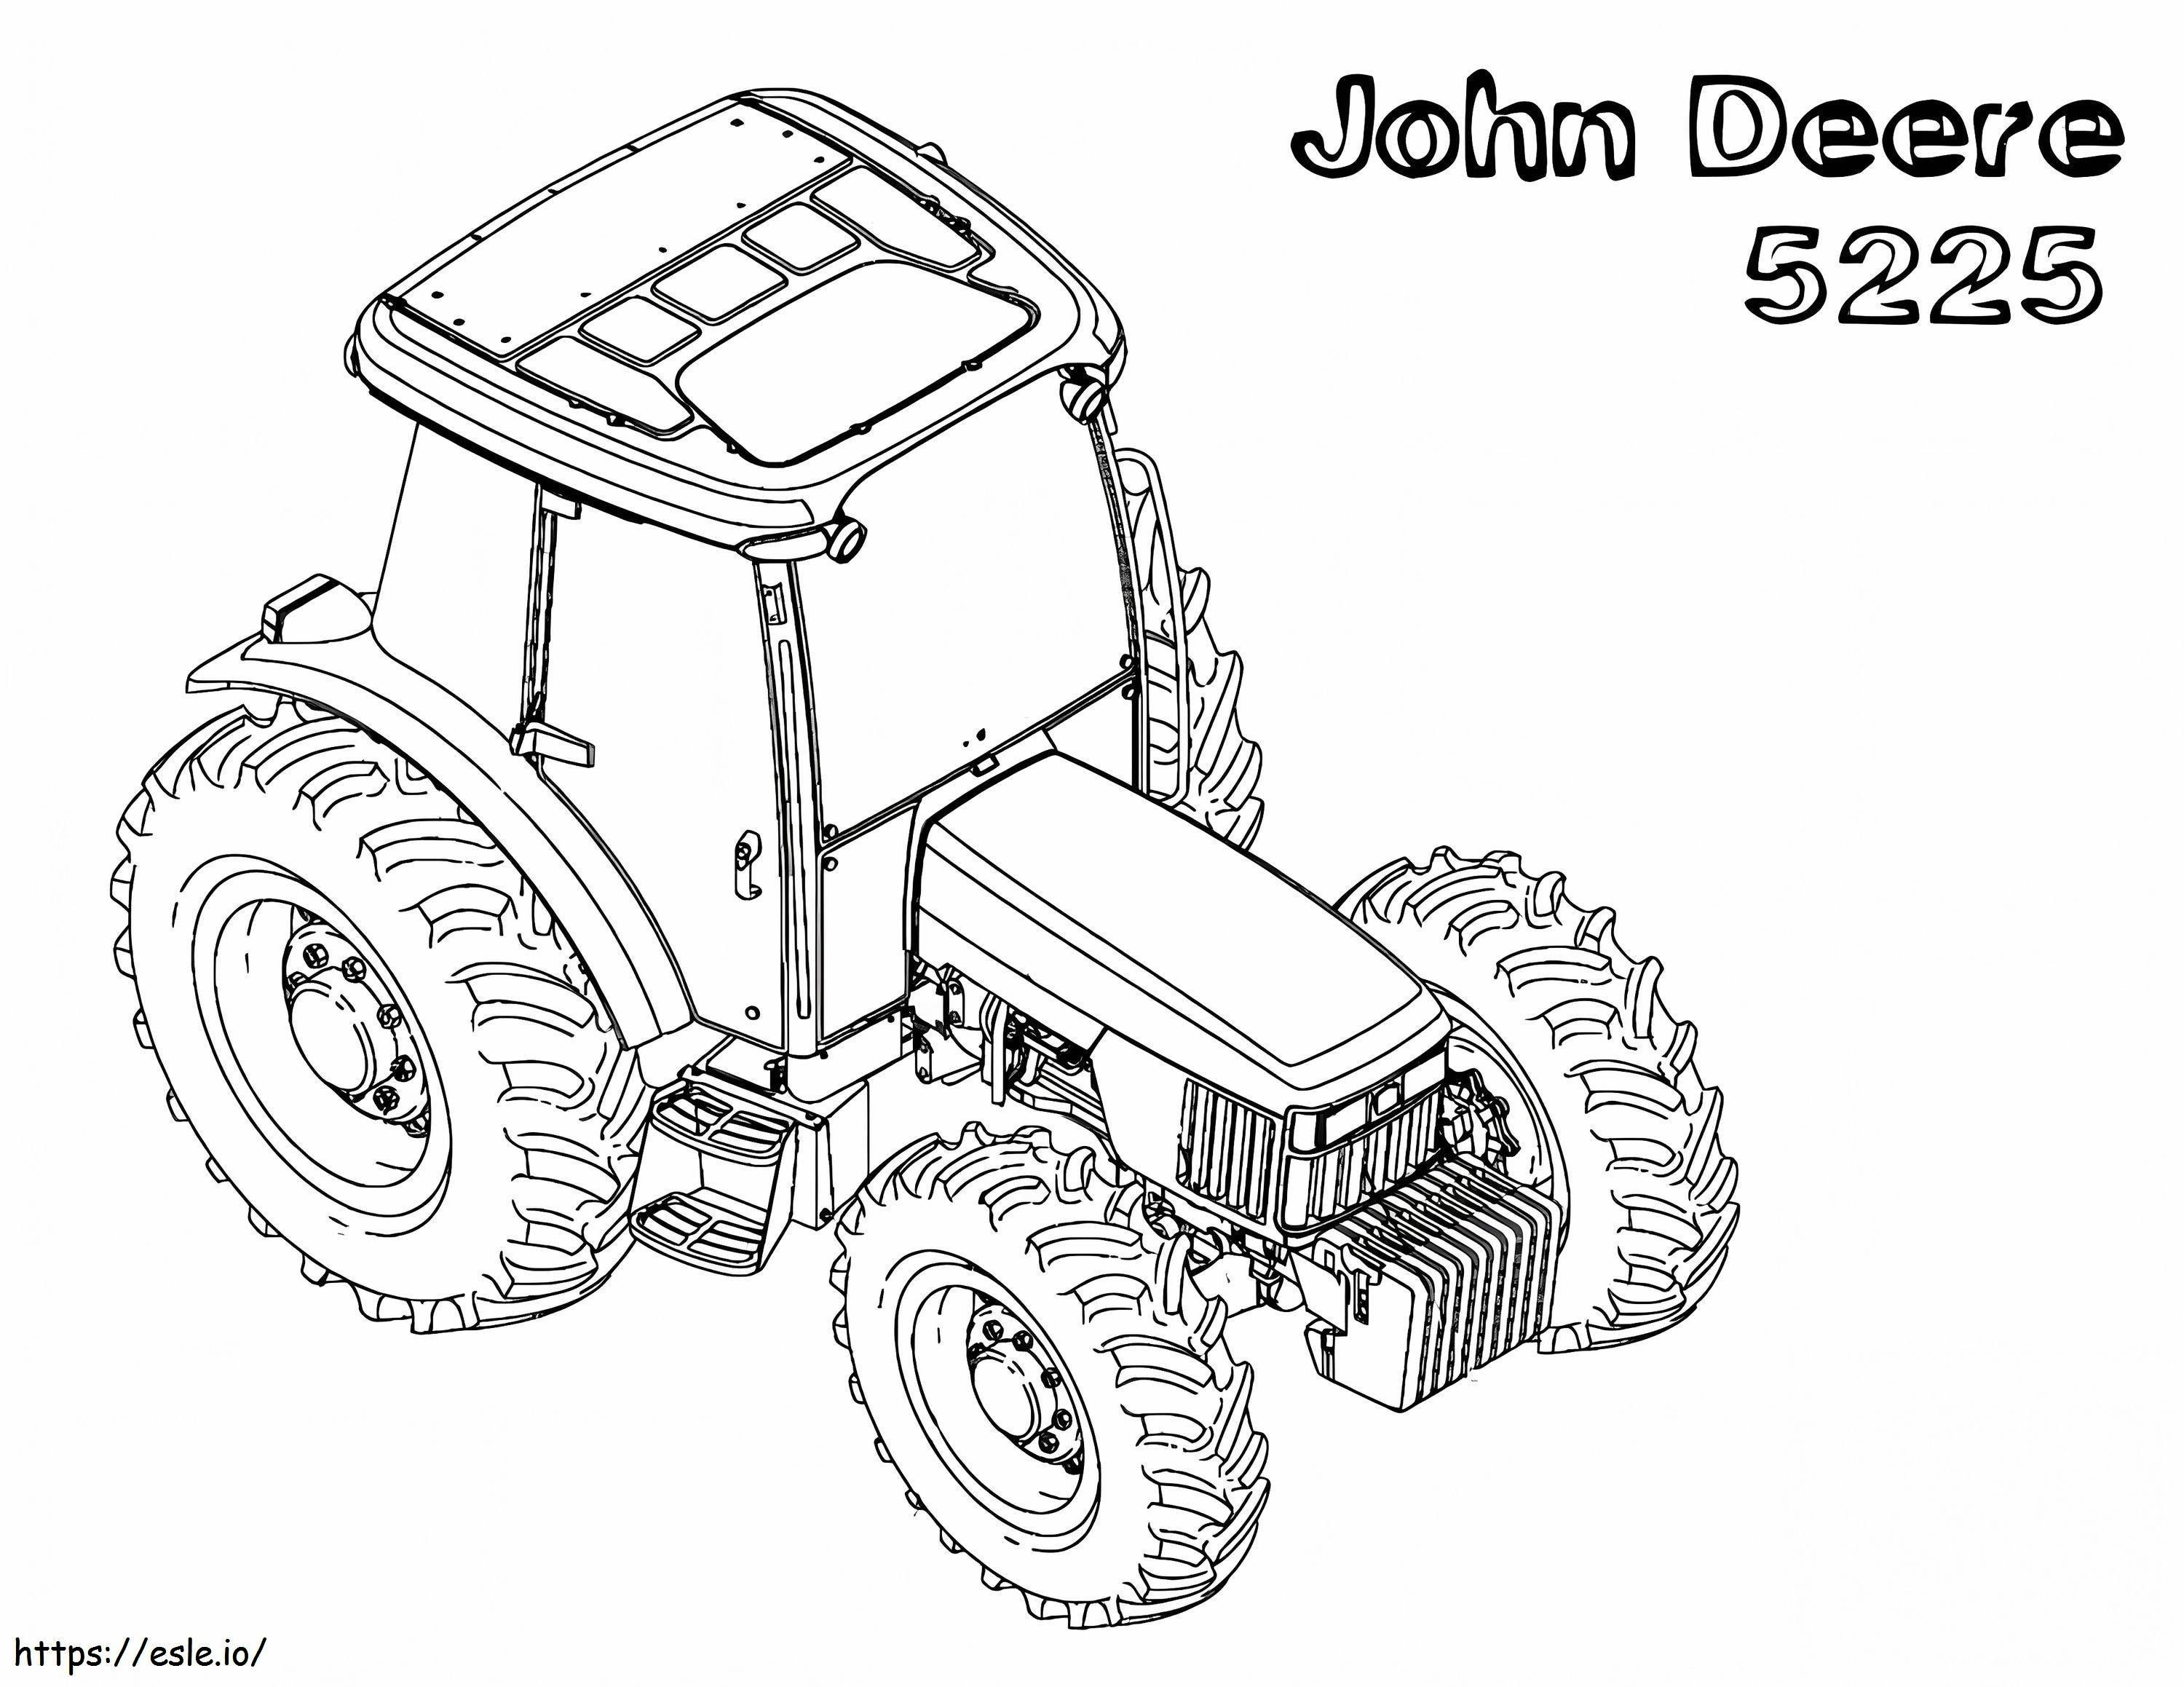 John Deere 5225 coloring page